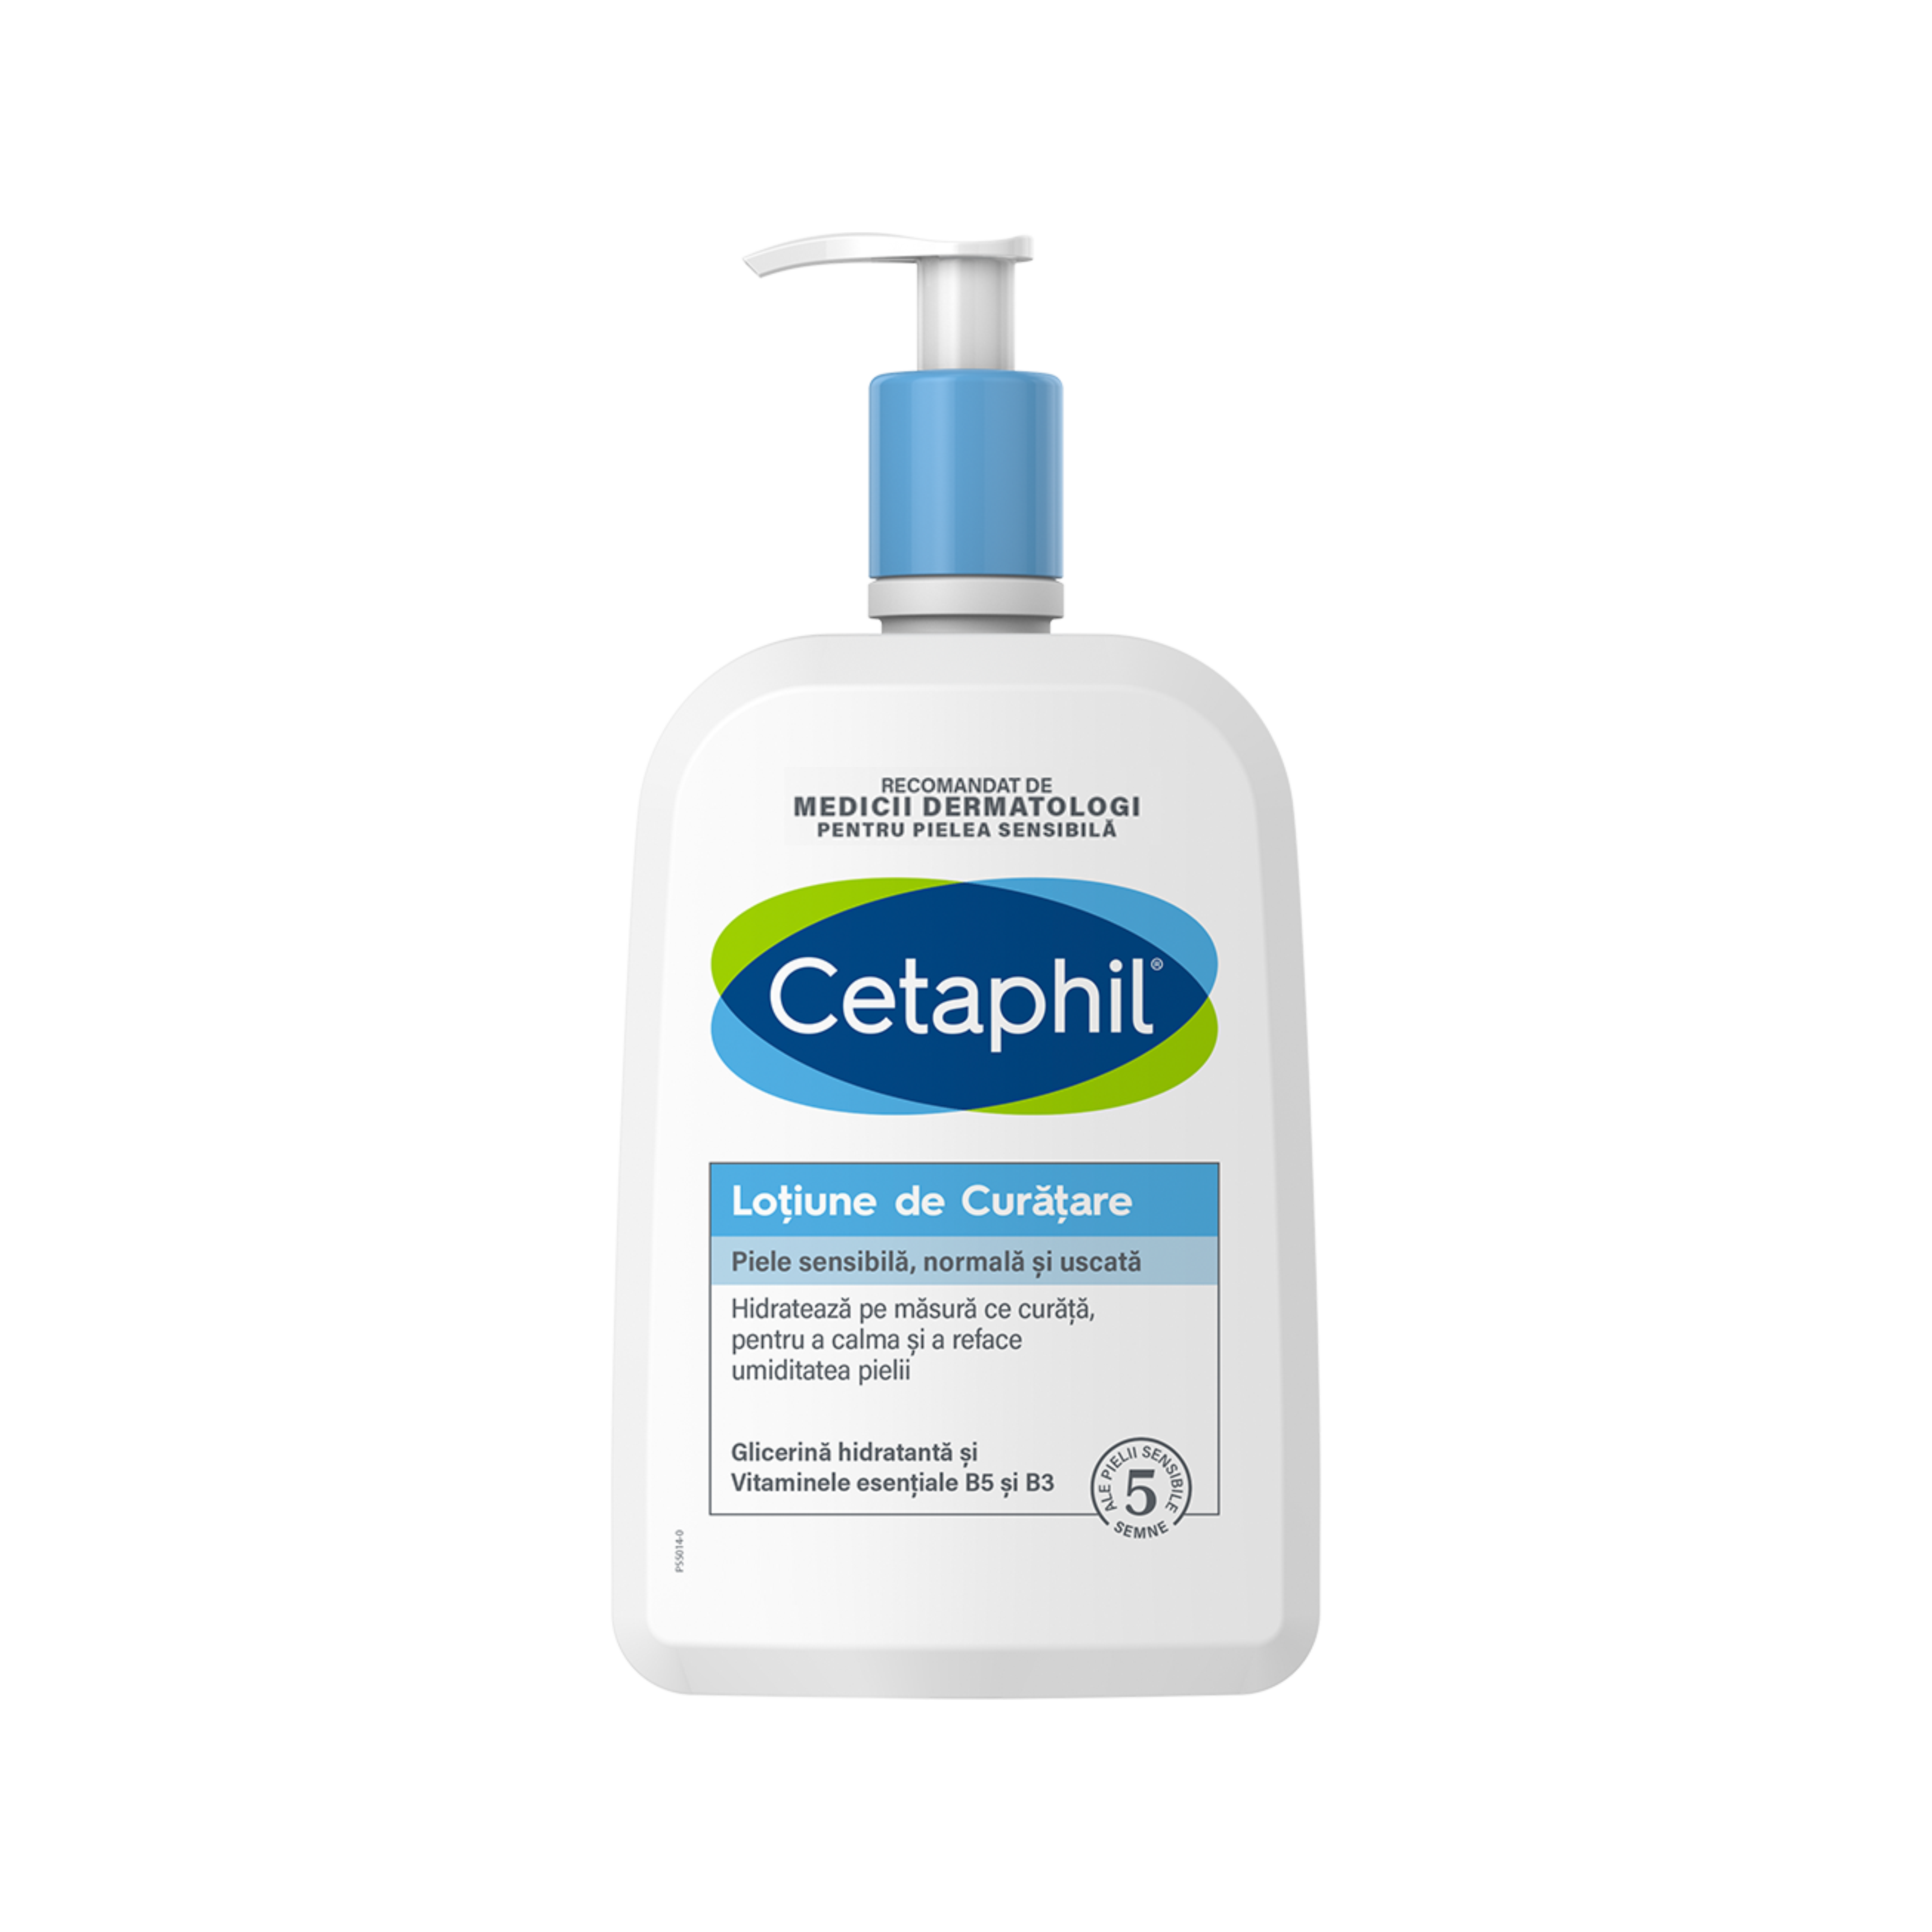 Lotiune de curatare Cetaphil, 460 ml, Galderma